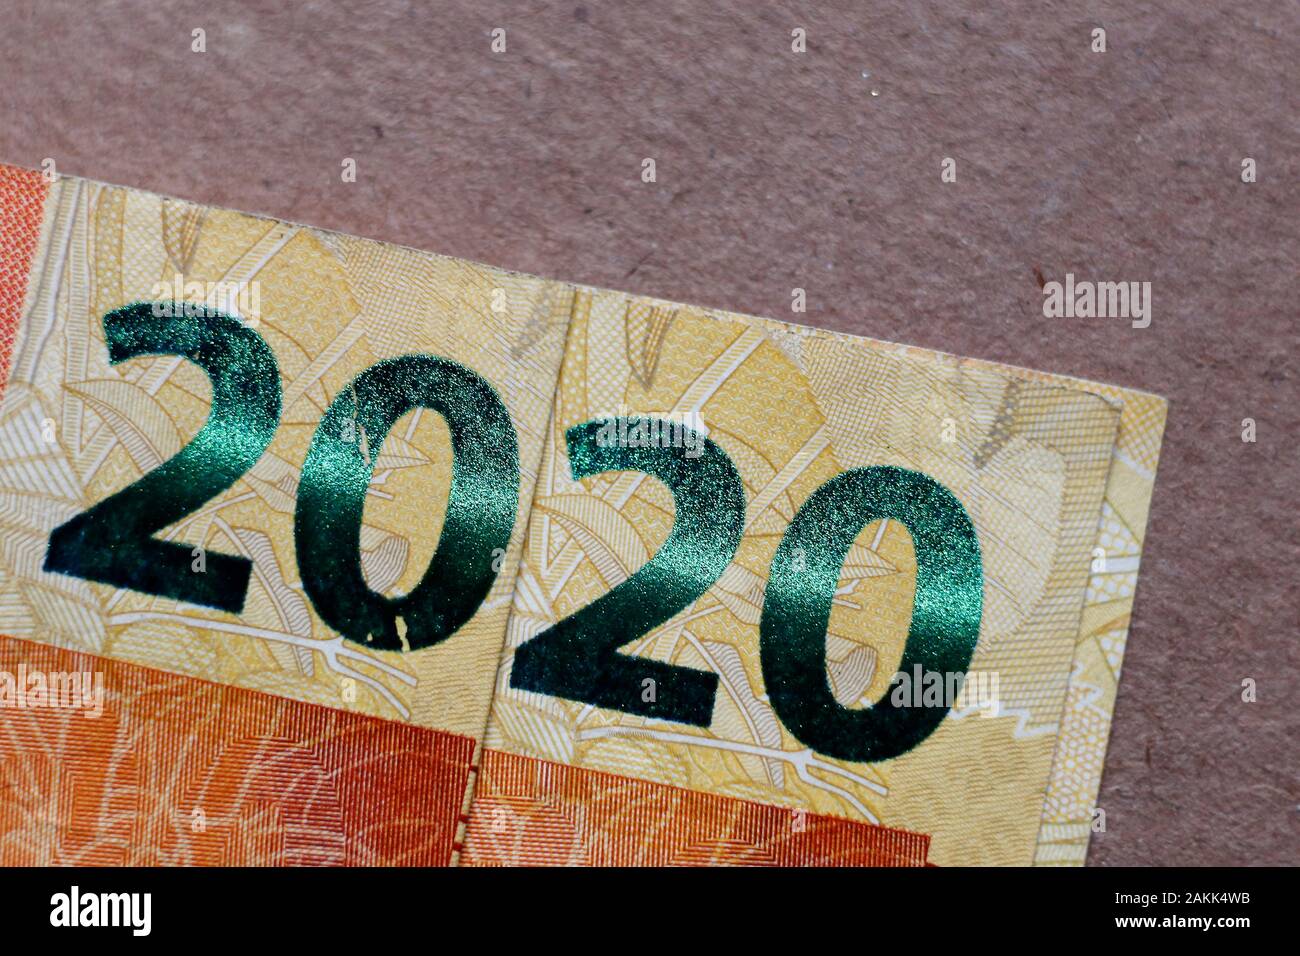 Real brasiliano note, soldi dal Brasile, note di Real, Brasile BRL banconota, valuta brasiliana, di economia e affari. Foto Stock